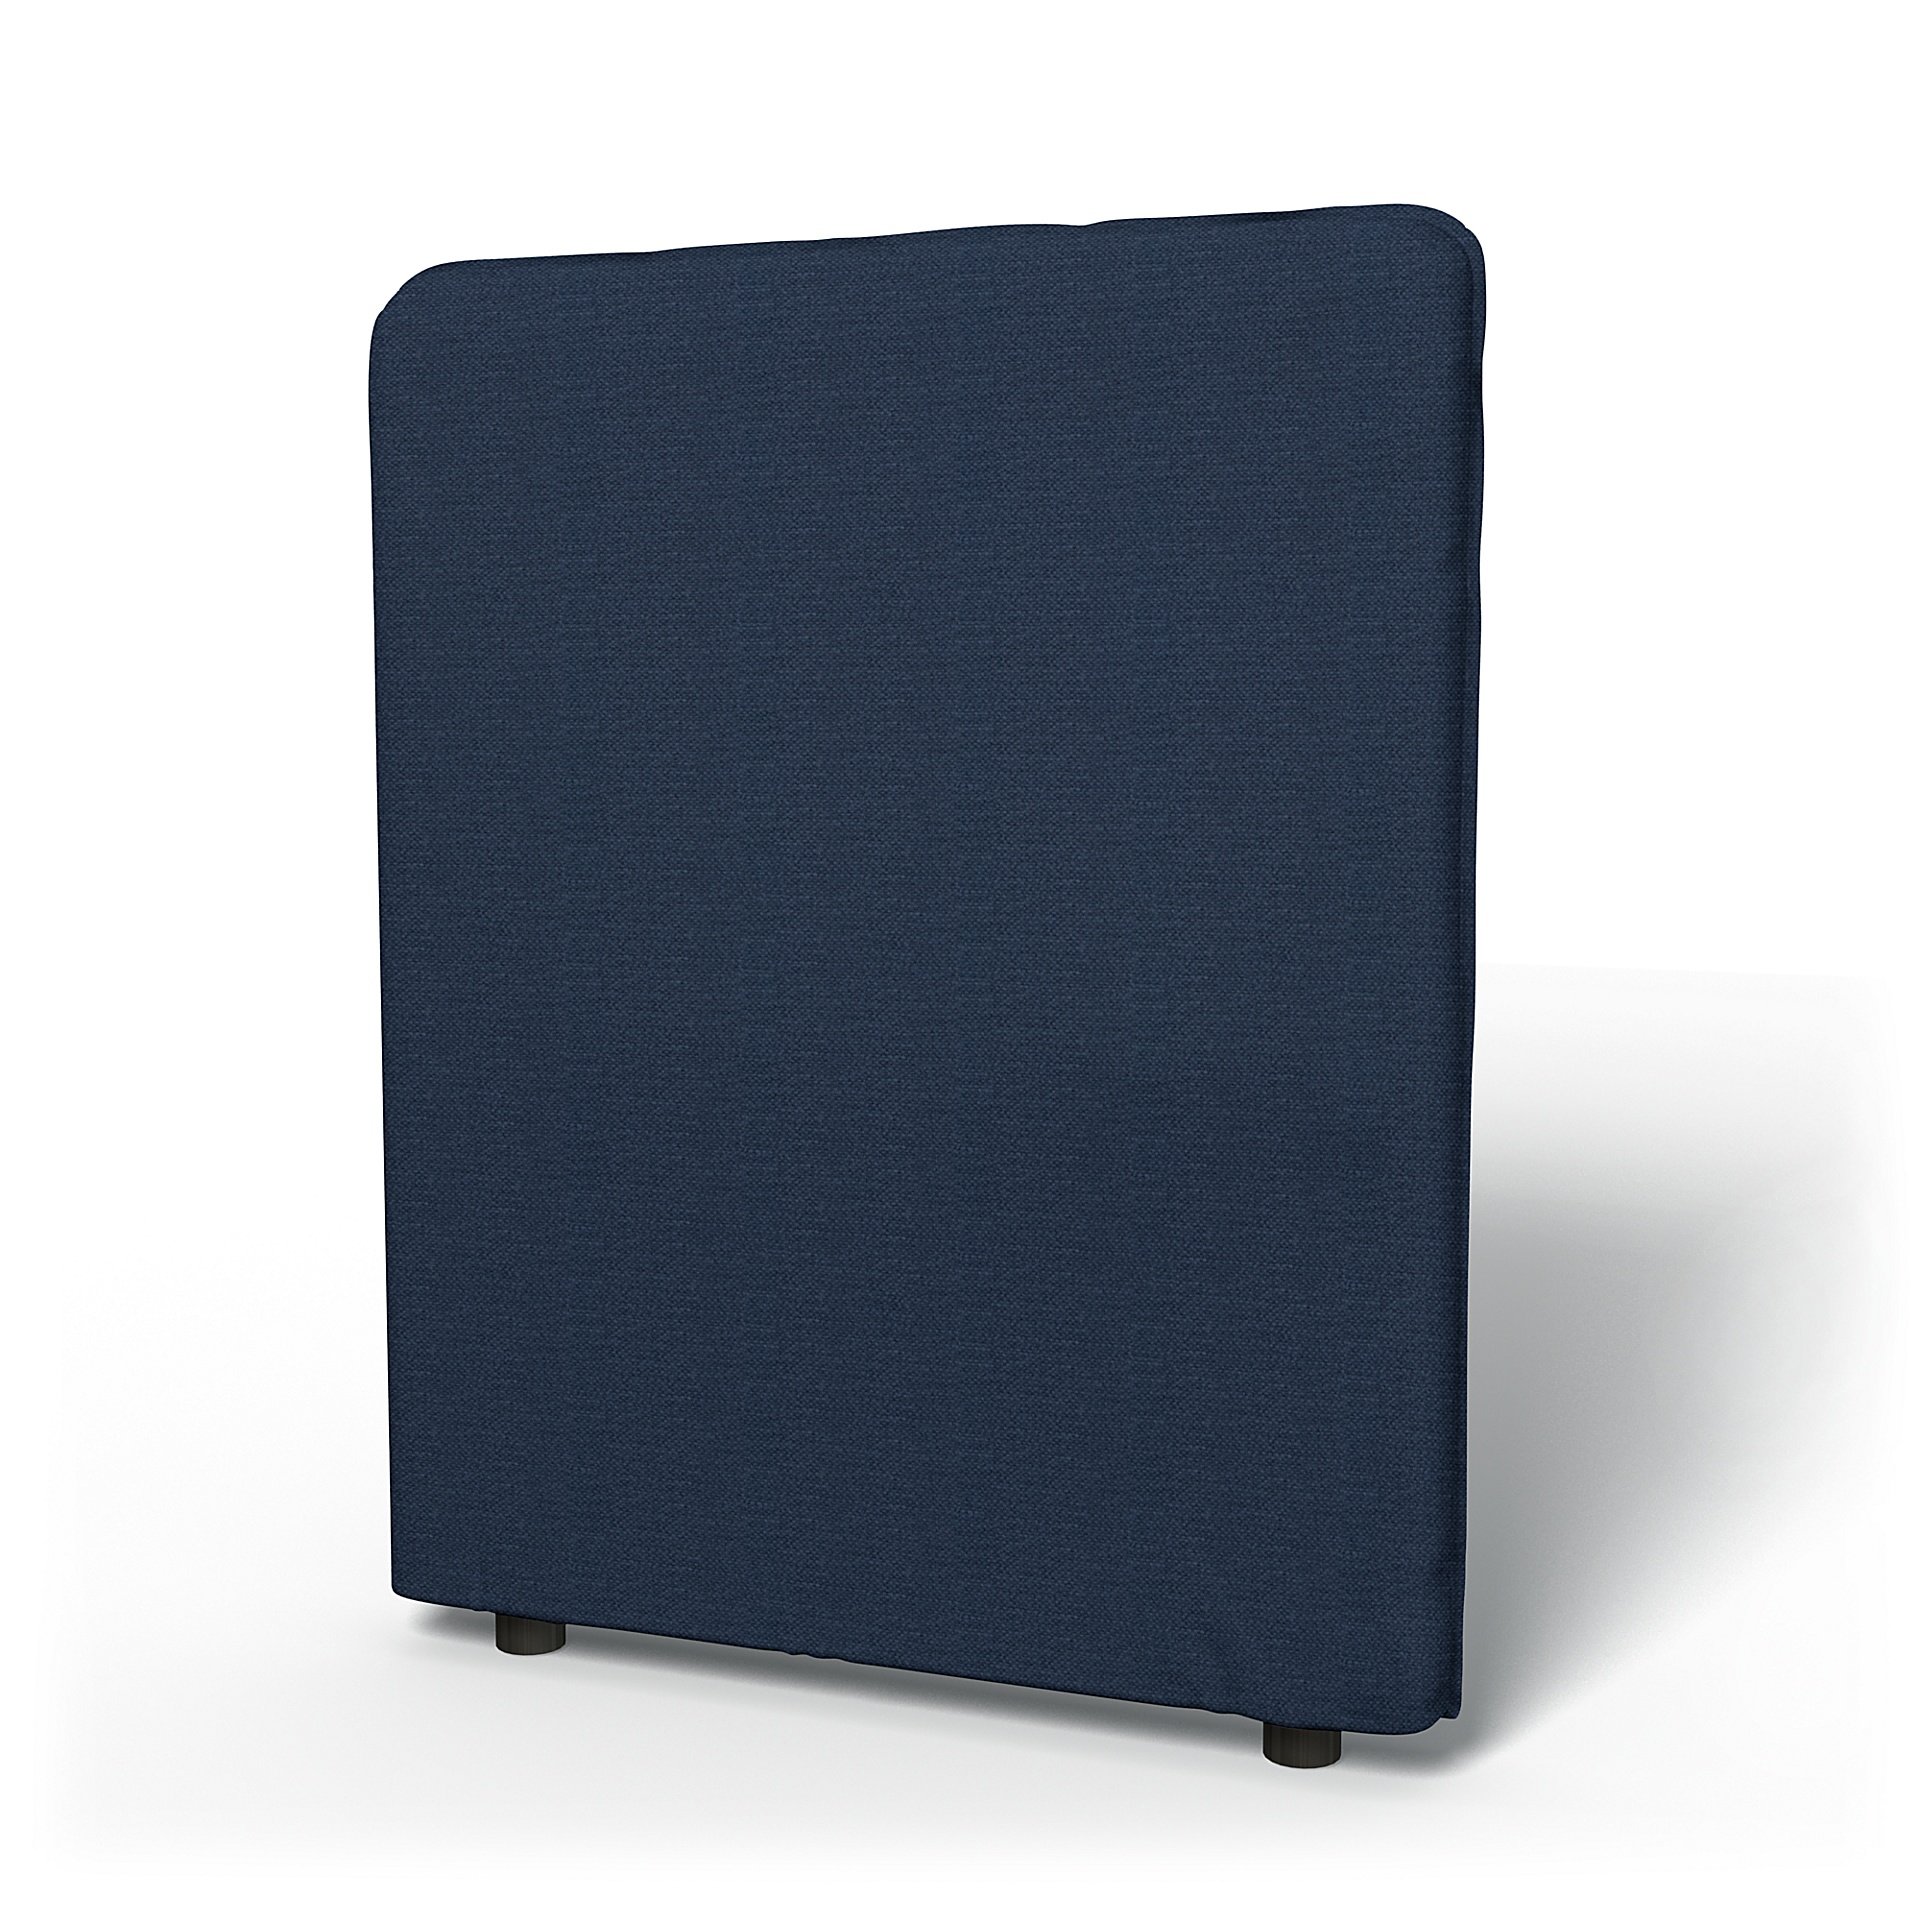 IKEA - Vallentuna High Backrest Cover 80x100cm 32x39in, Navy Blue, Linen - Bemz